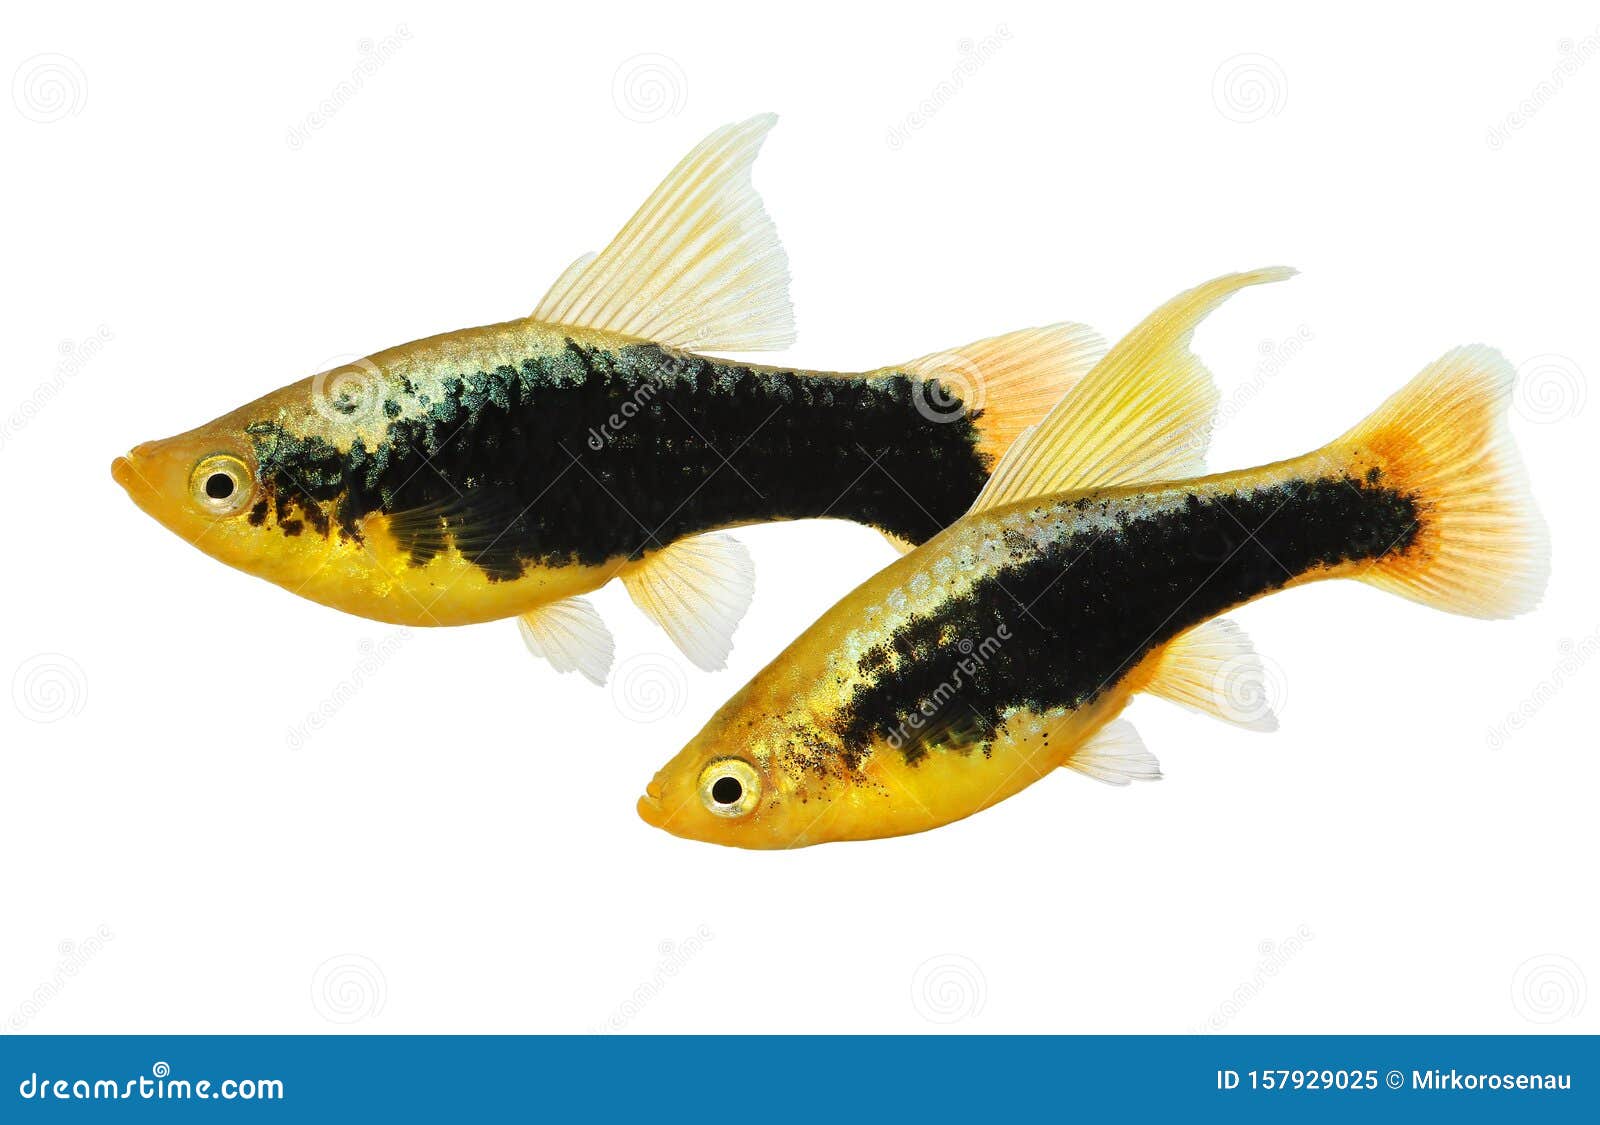 hi fin tuxedo platy platy male xiphophorus maculatus tropical aquarium fish